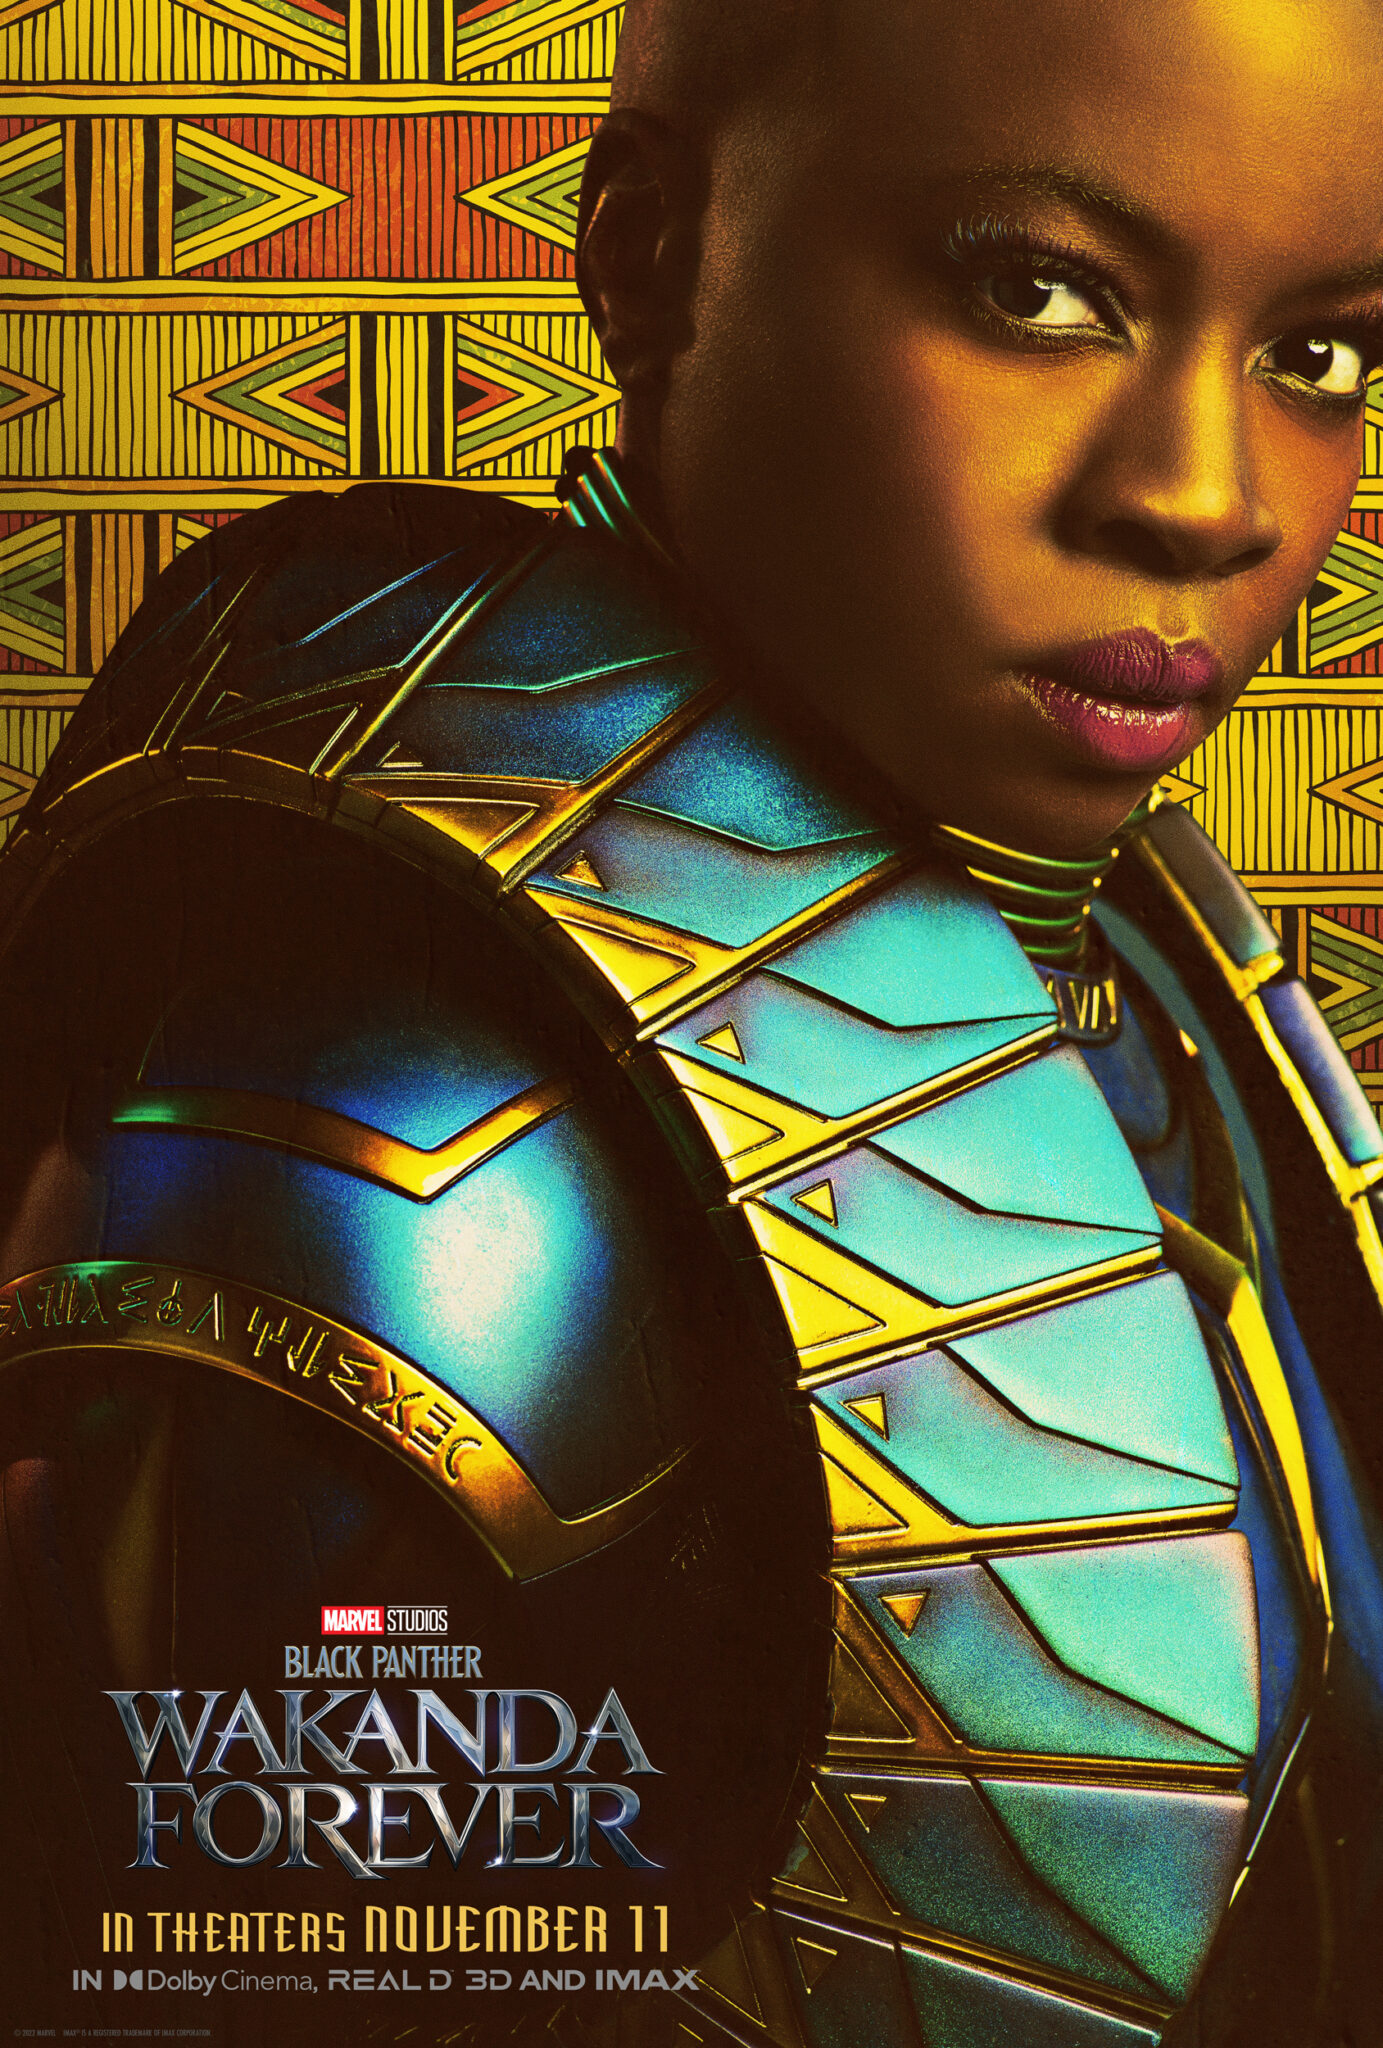 Marvel Studios’ Black Panther: Wakanda Forever